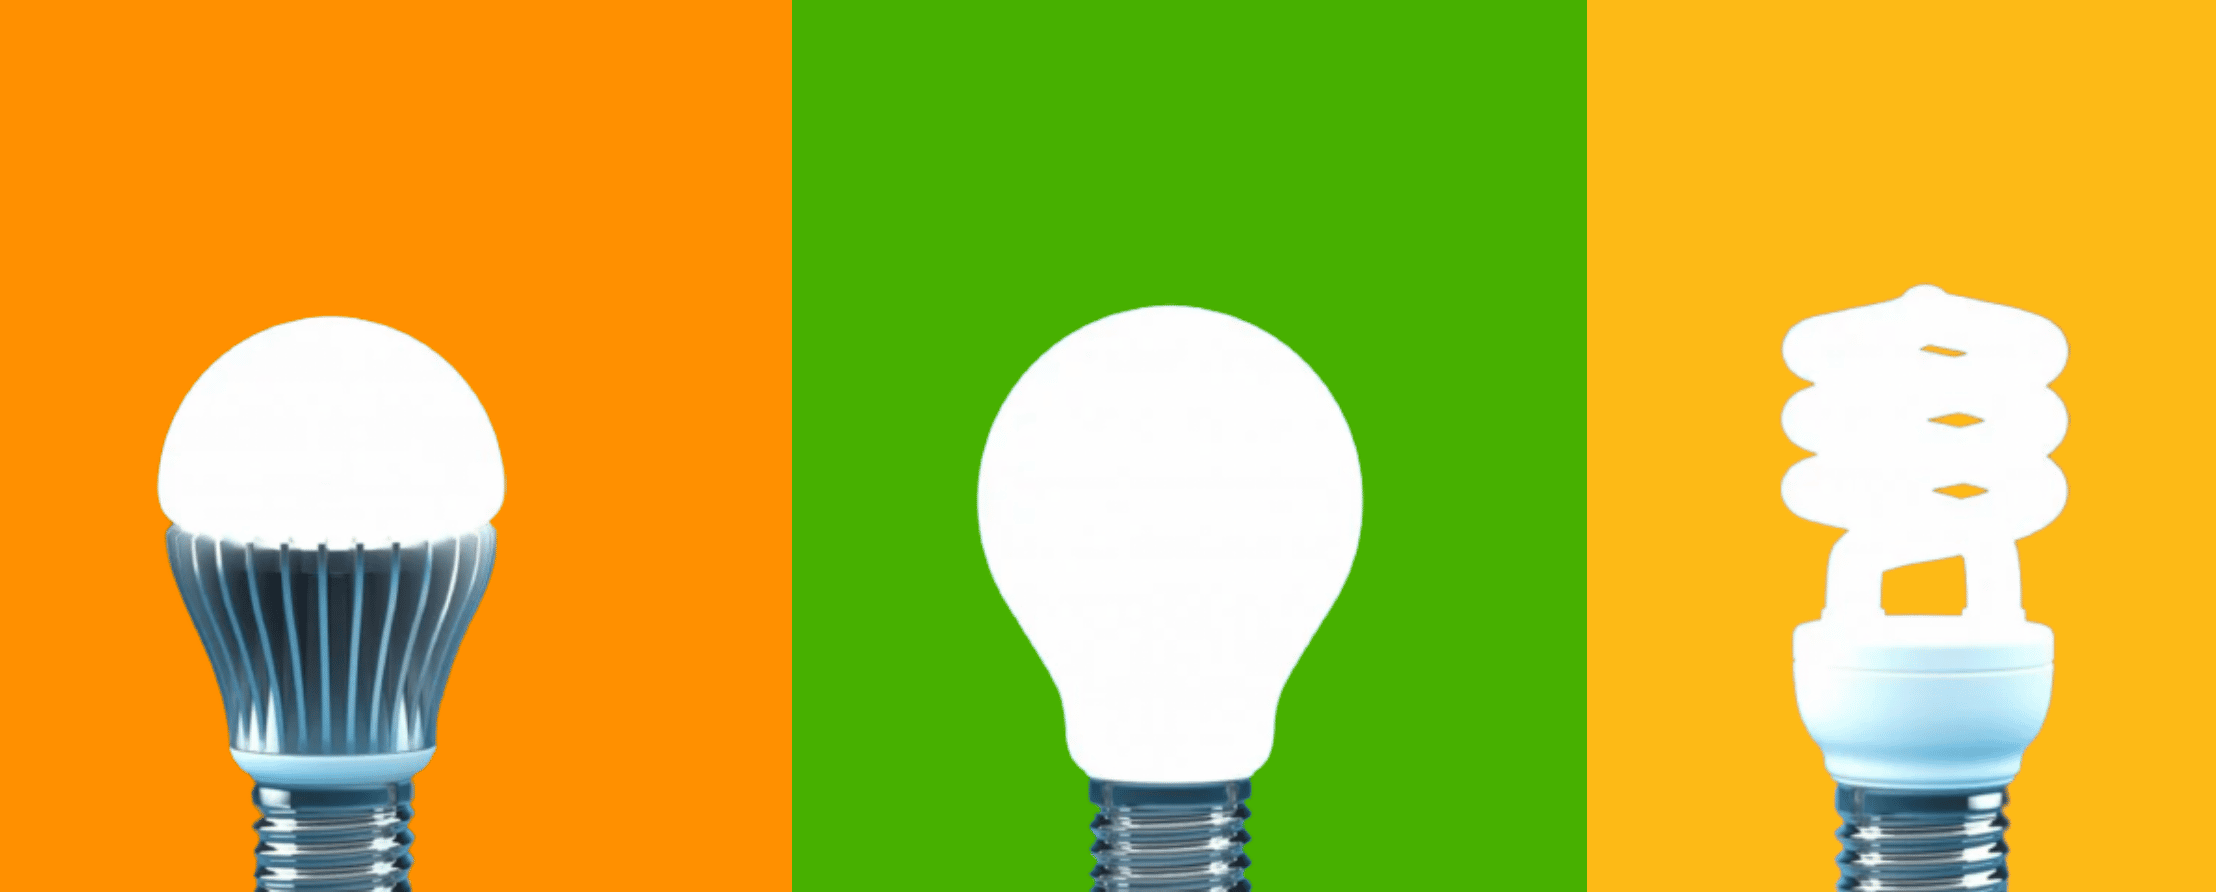 Incandescent Vs. CFL Vs. LED – Which Should You Buy?